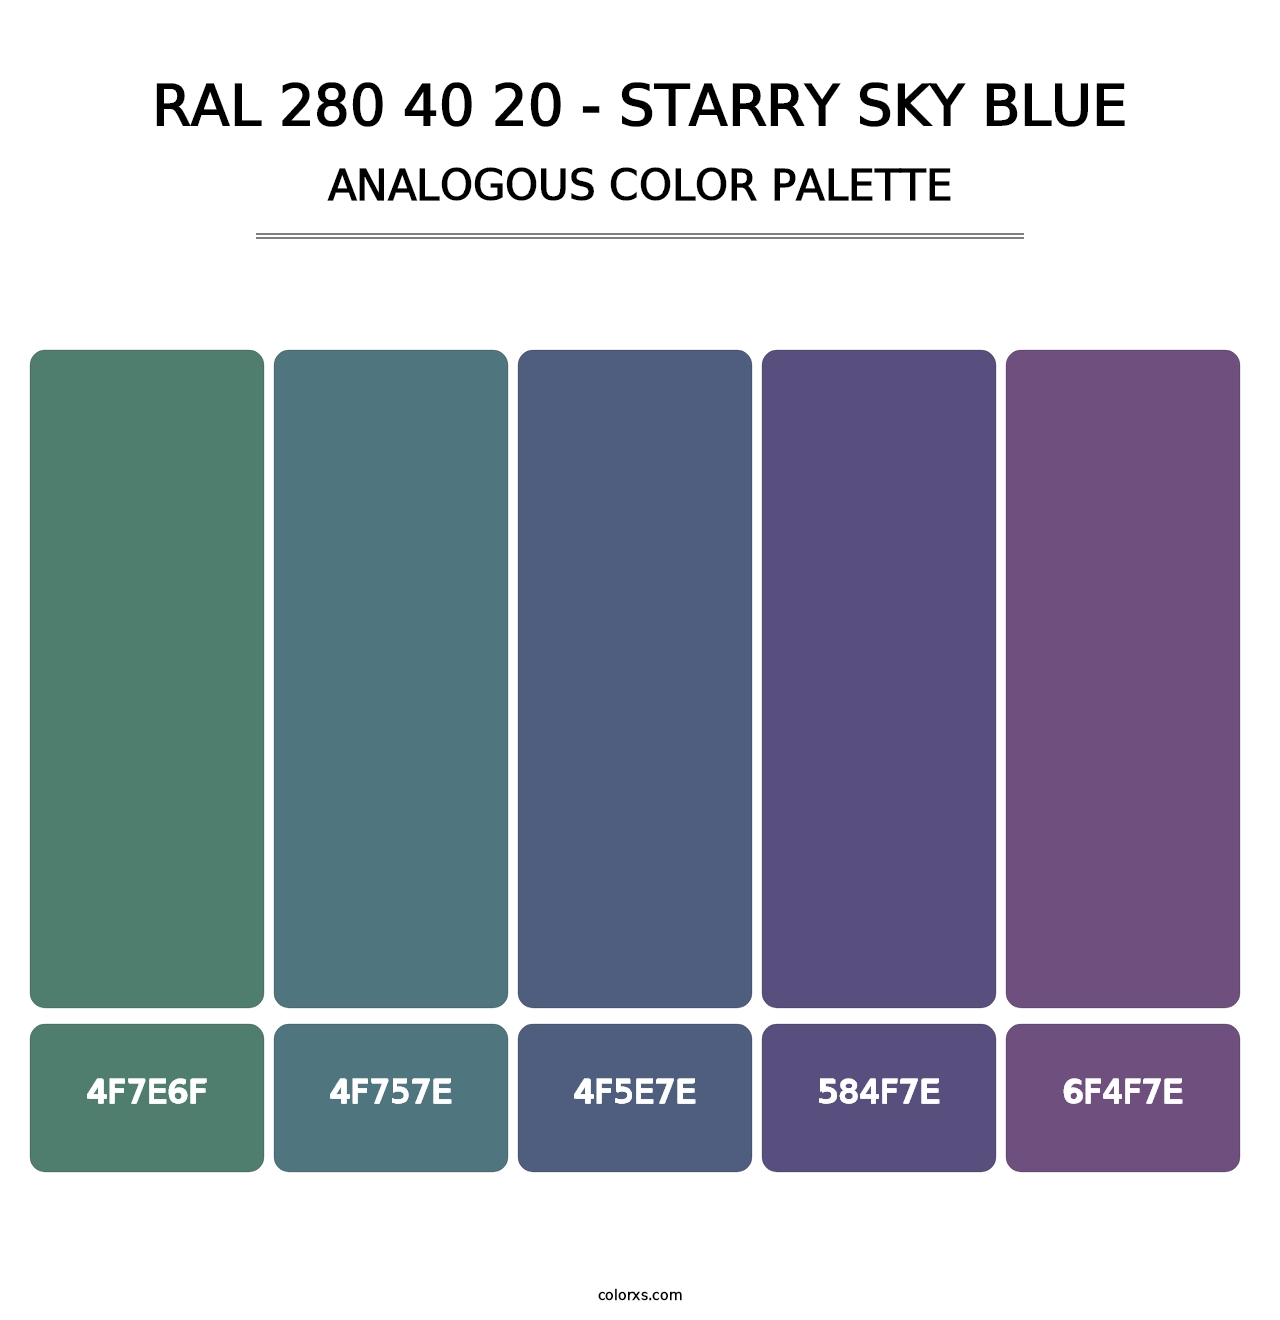 RAL 280 40 20 - Starry Sky Blue - Analogous Color Palette